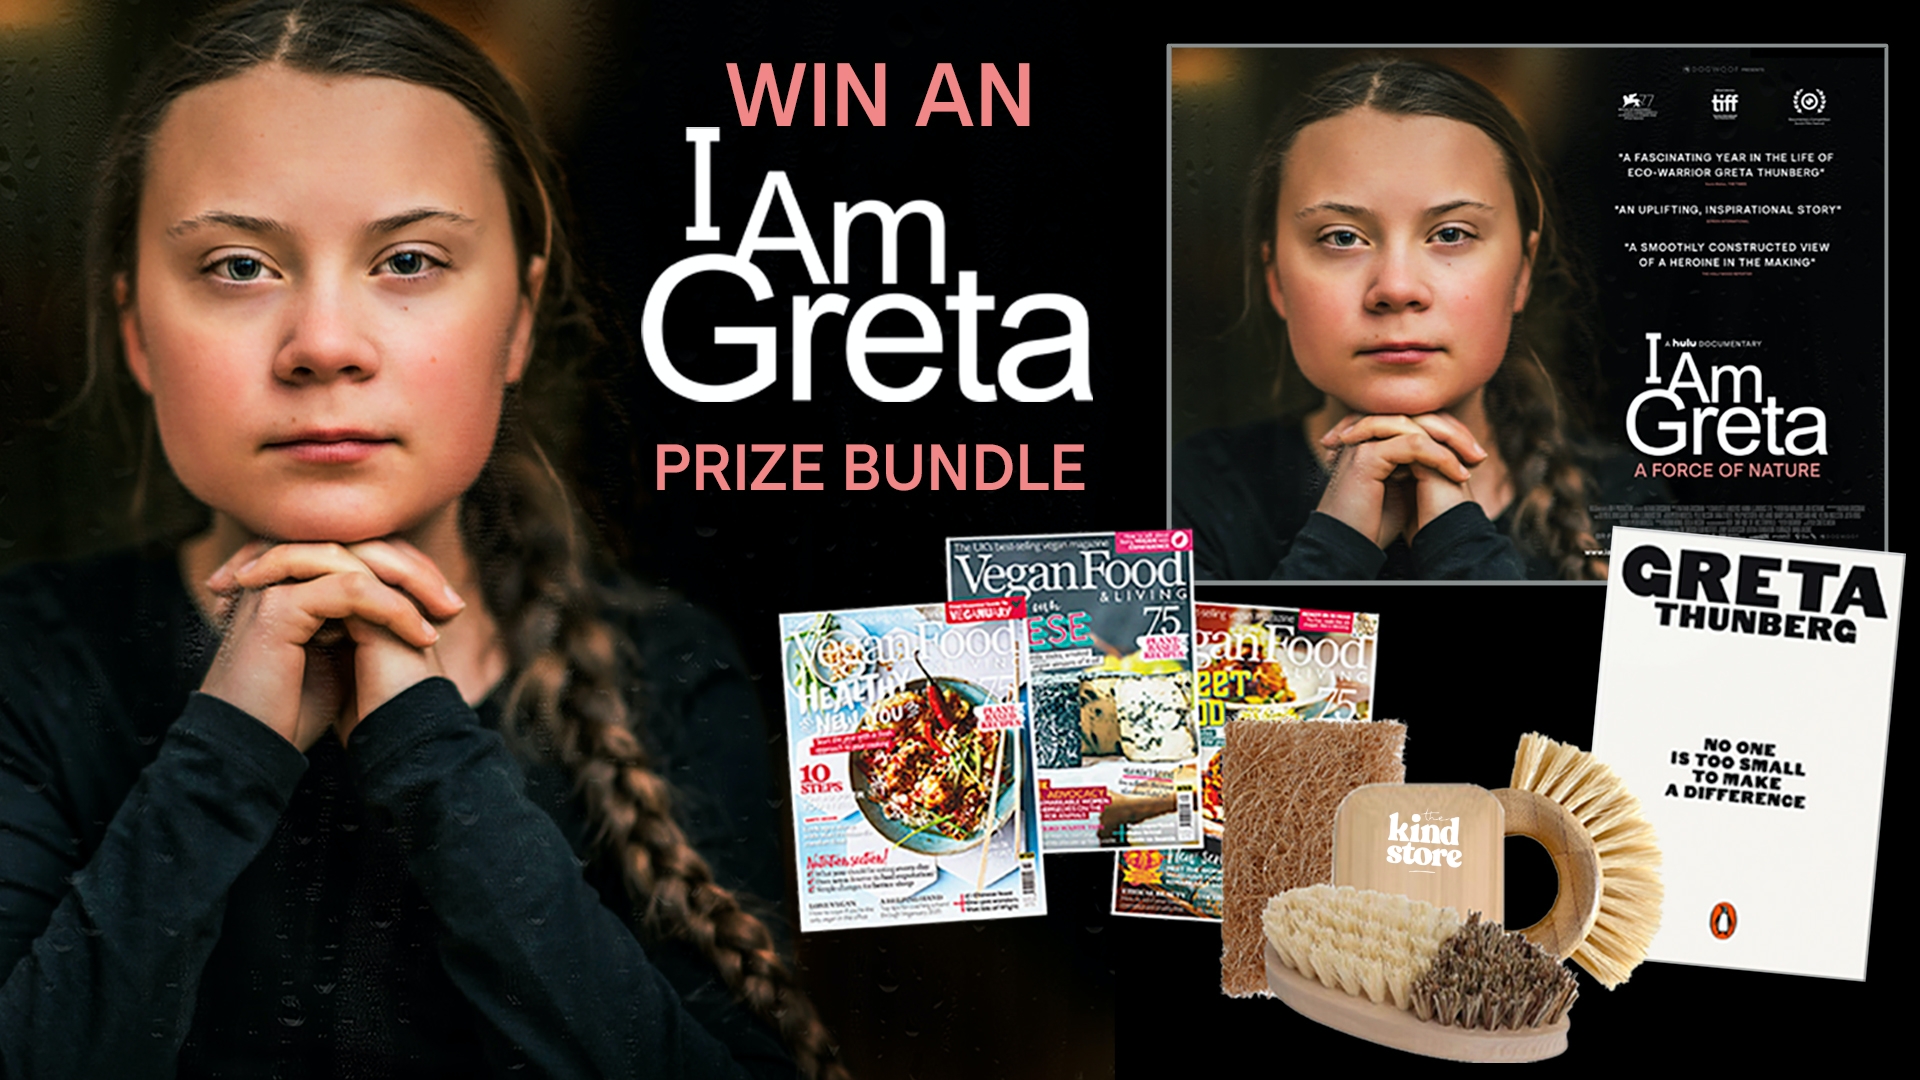 I Am Greta prize bundle details